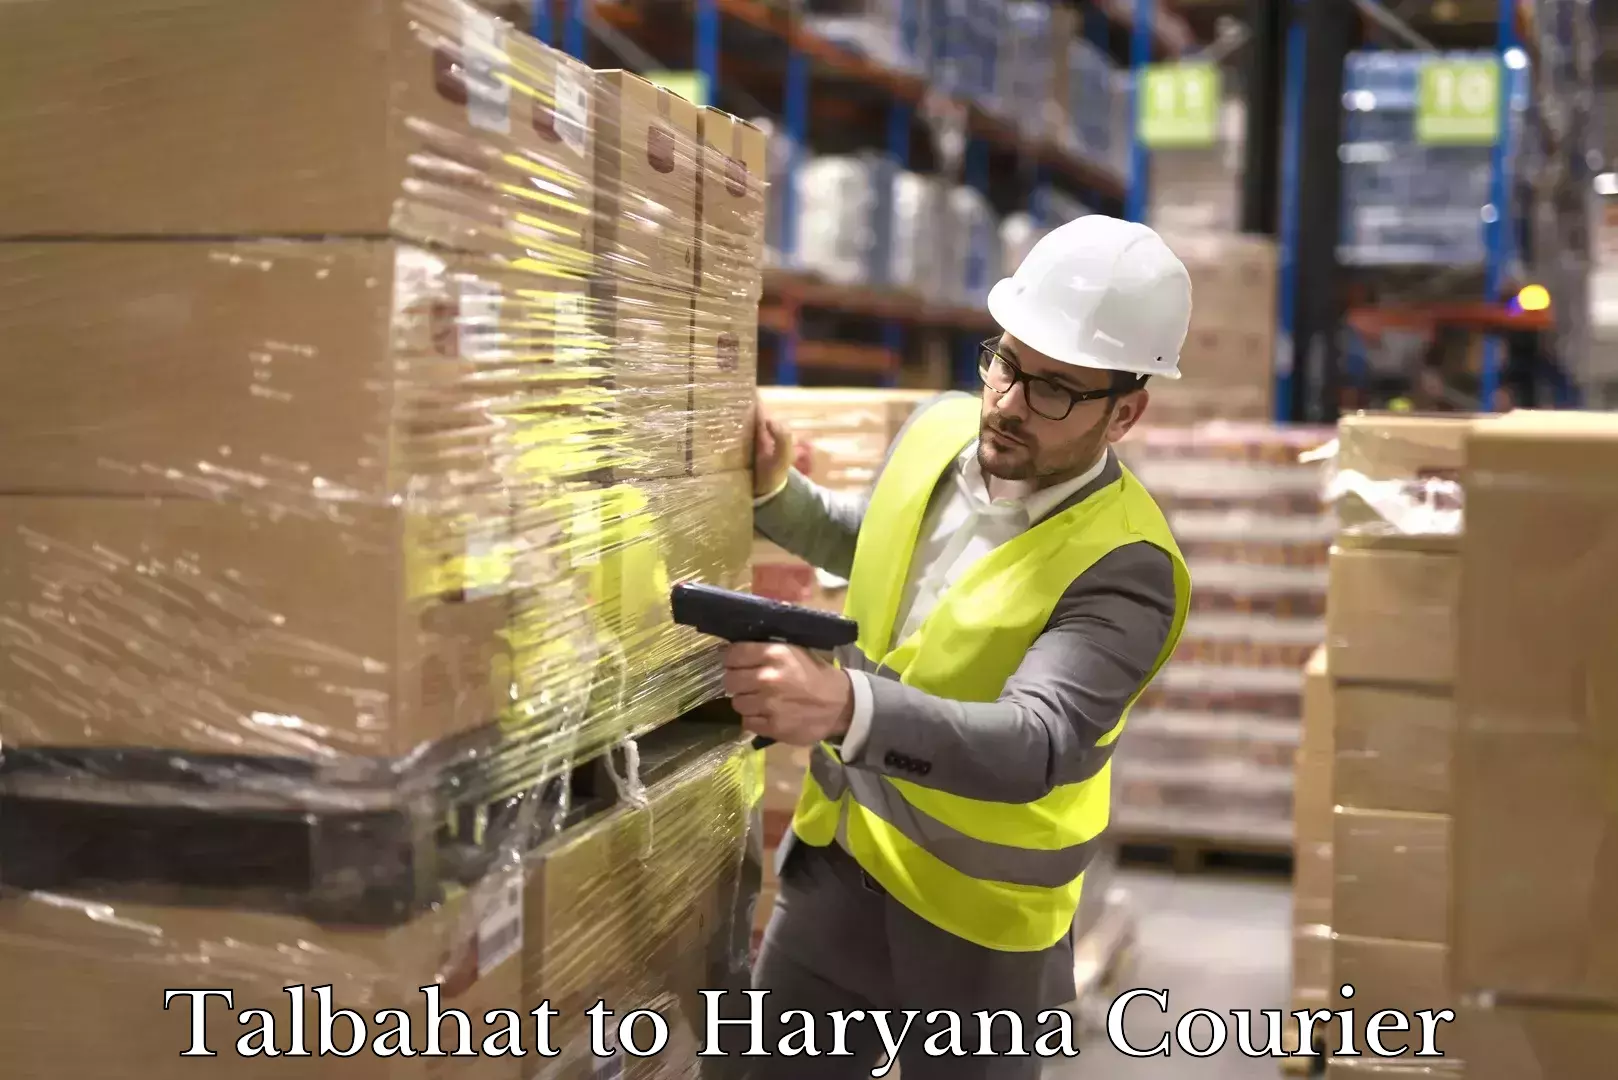 Courier service partnerships Talbahat to Haryana